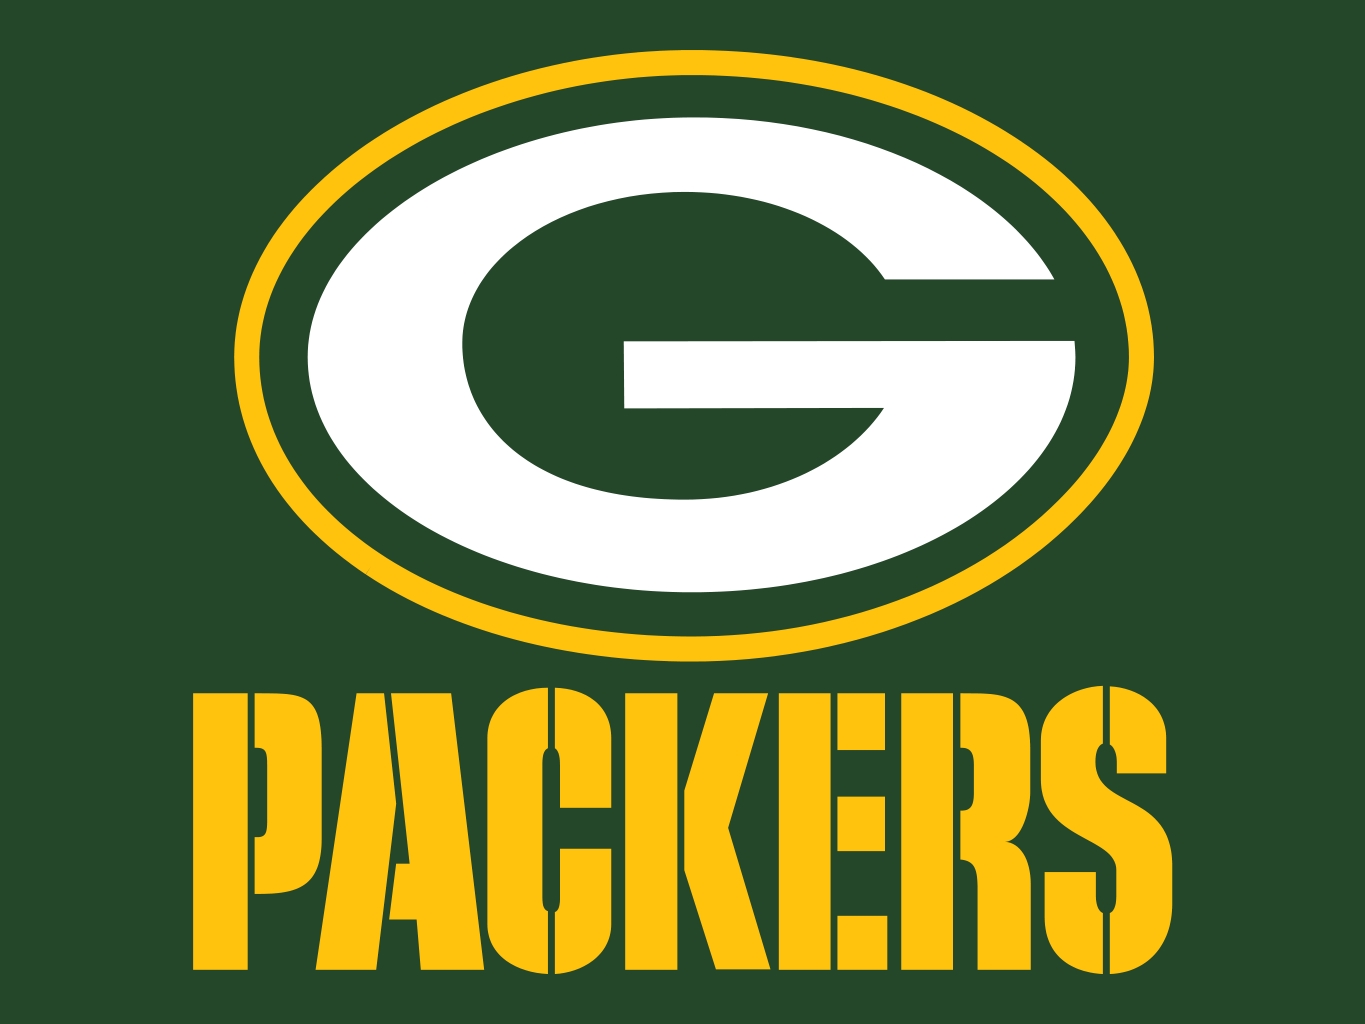 NFL Teams - Green Bay Packers - CVS Flags